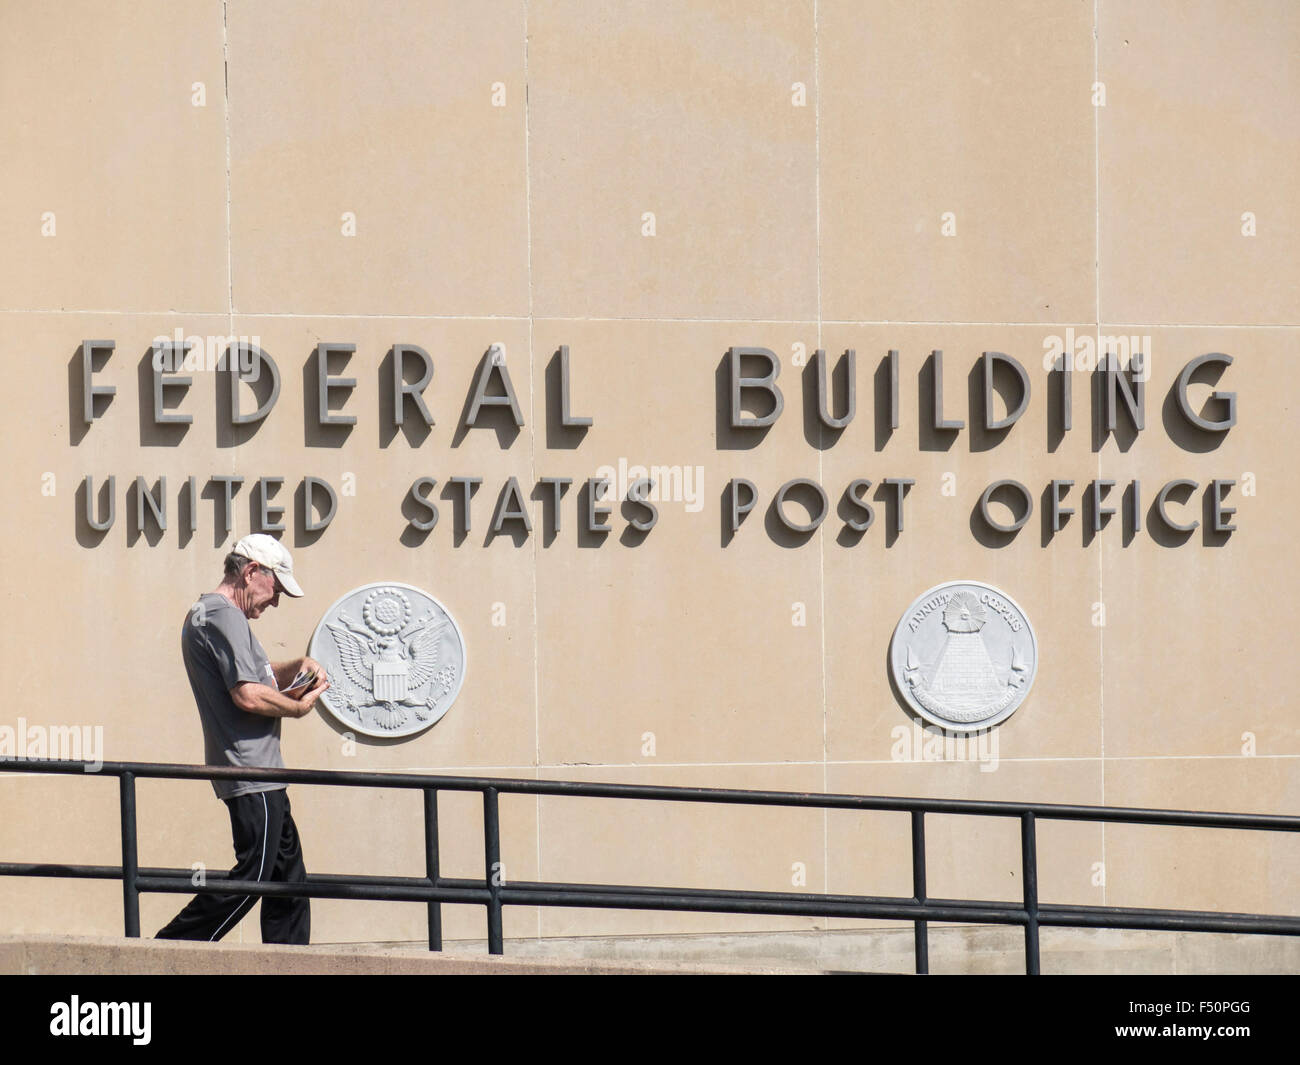 Post Office Stock Photo